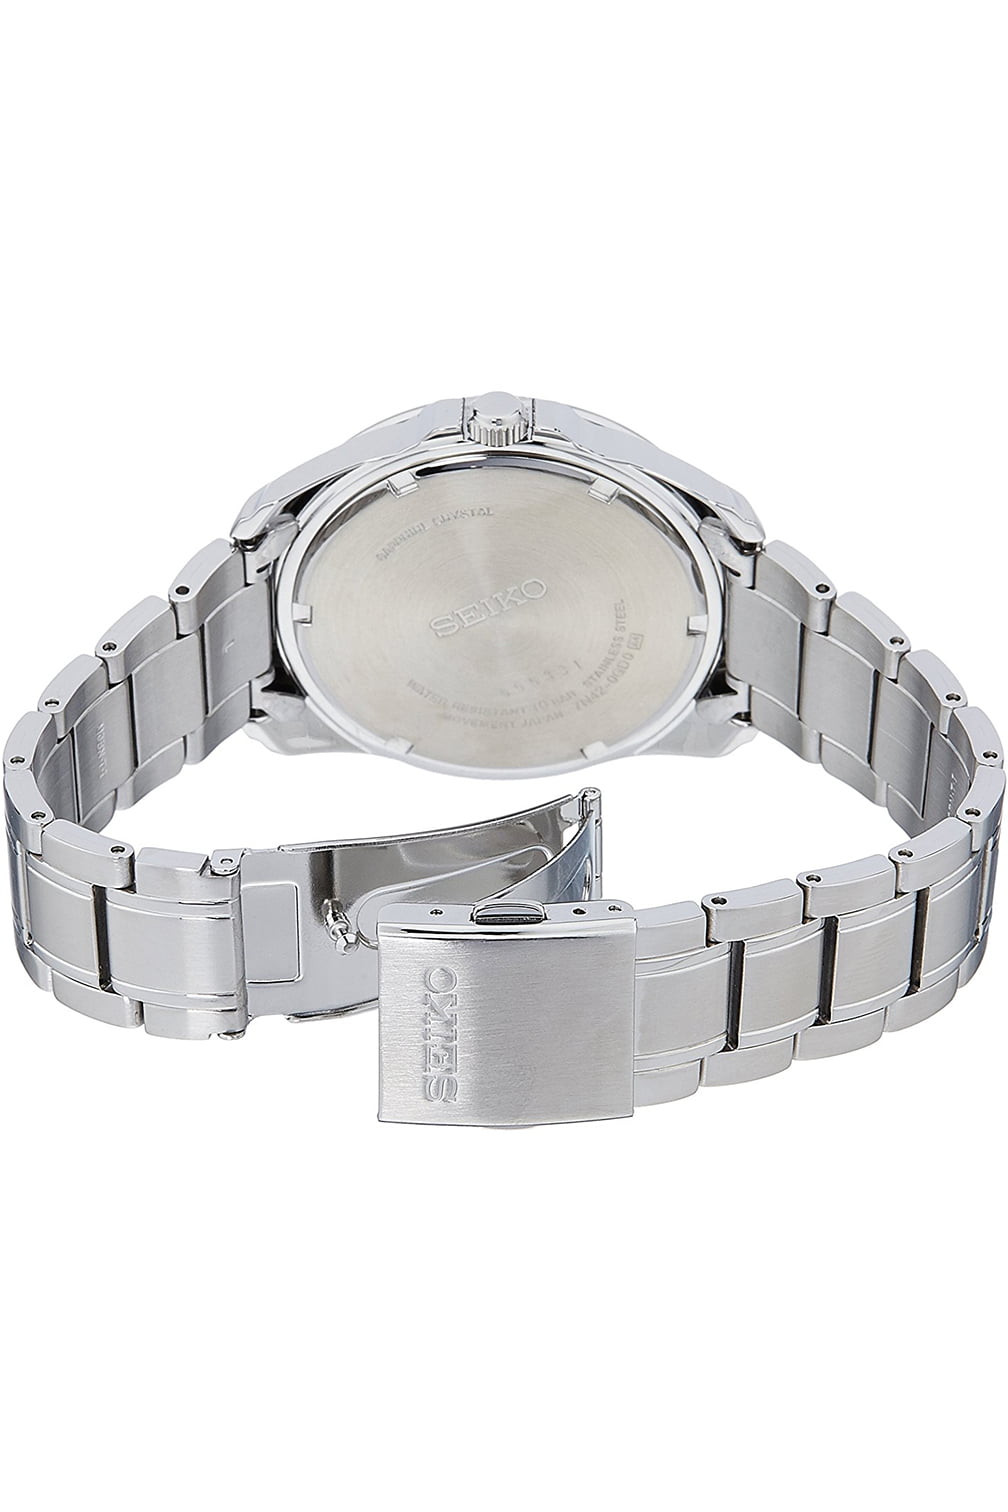 SGEH45P1,Men's Quartz,Stainless Steel Case & Bracelet,Sapphire  Crystal,Date,100m WR,SGEH45 